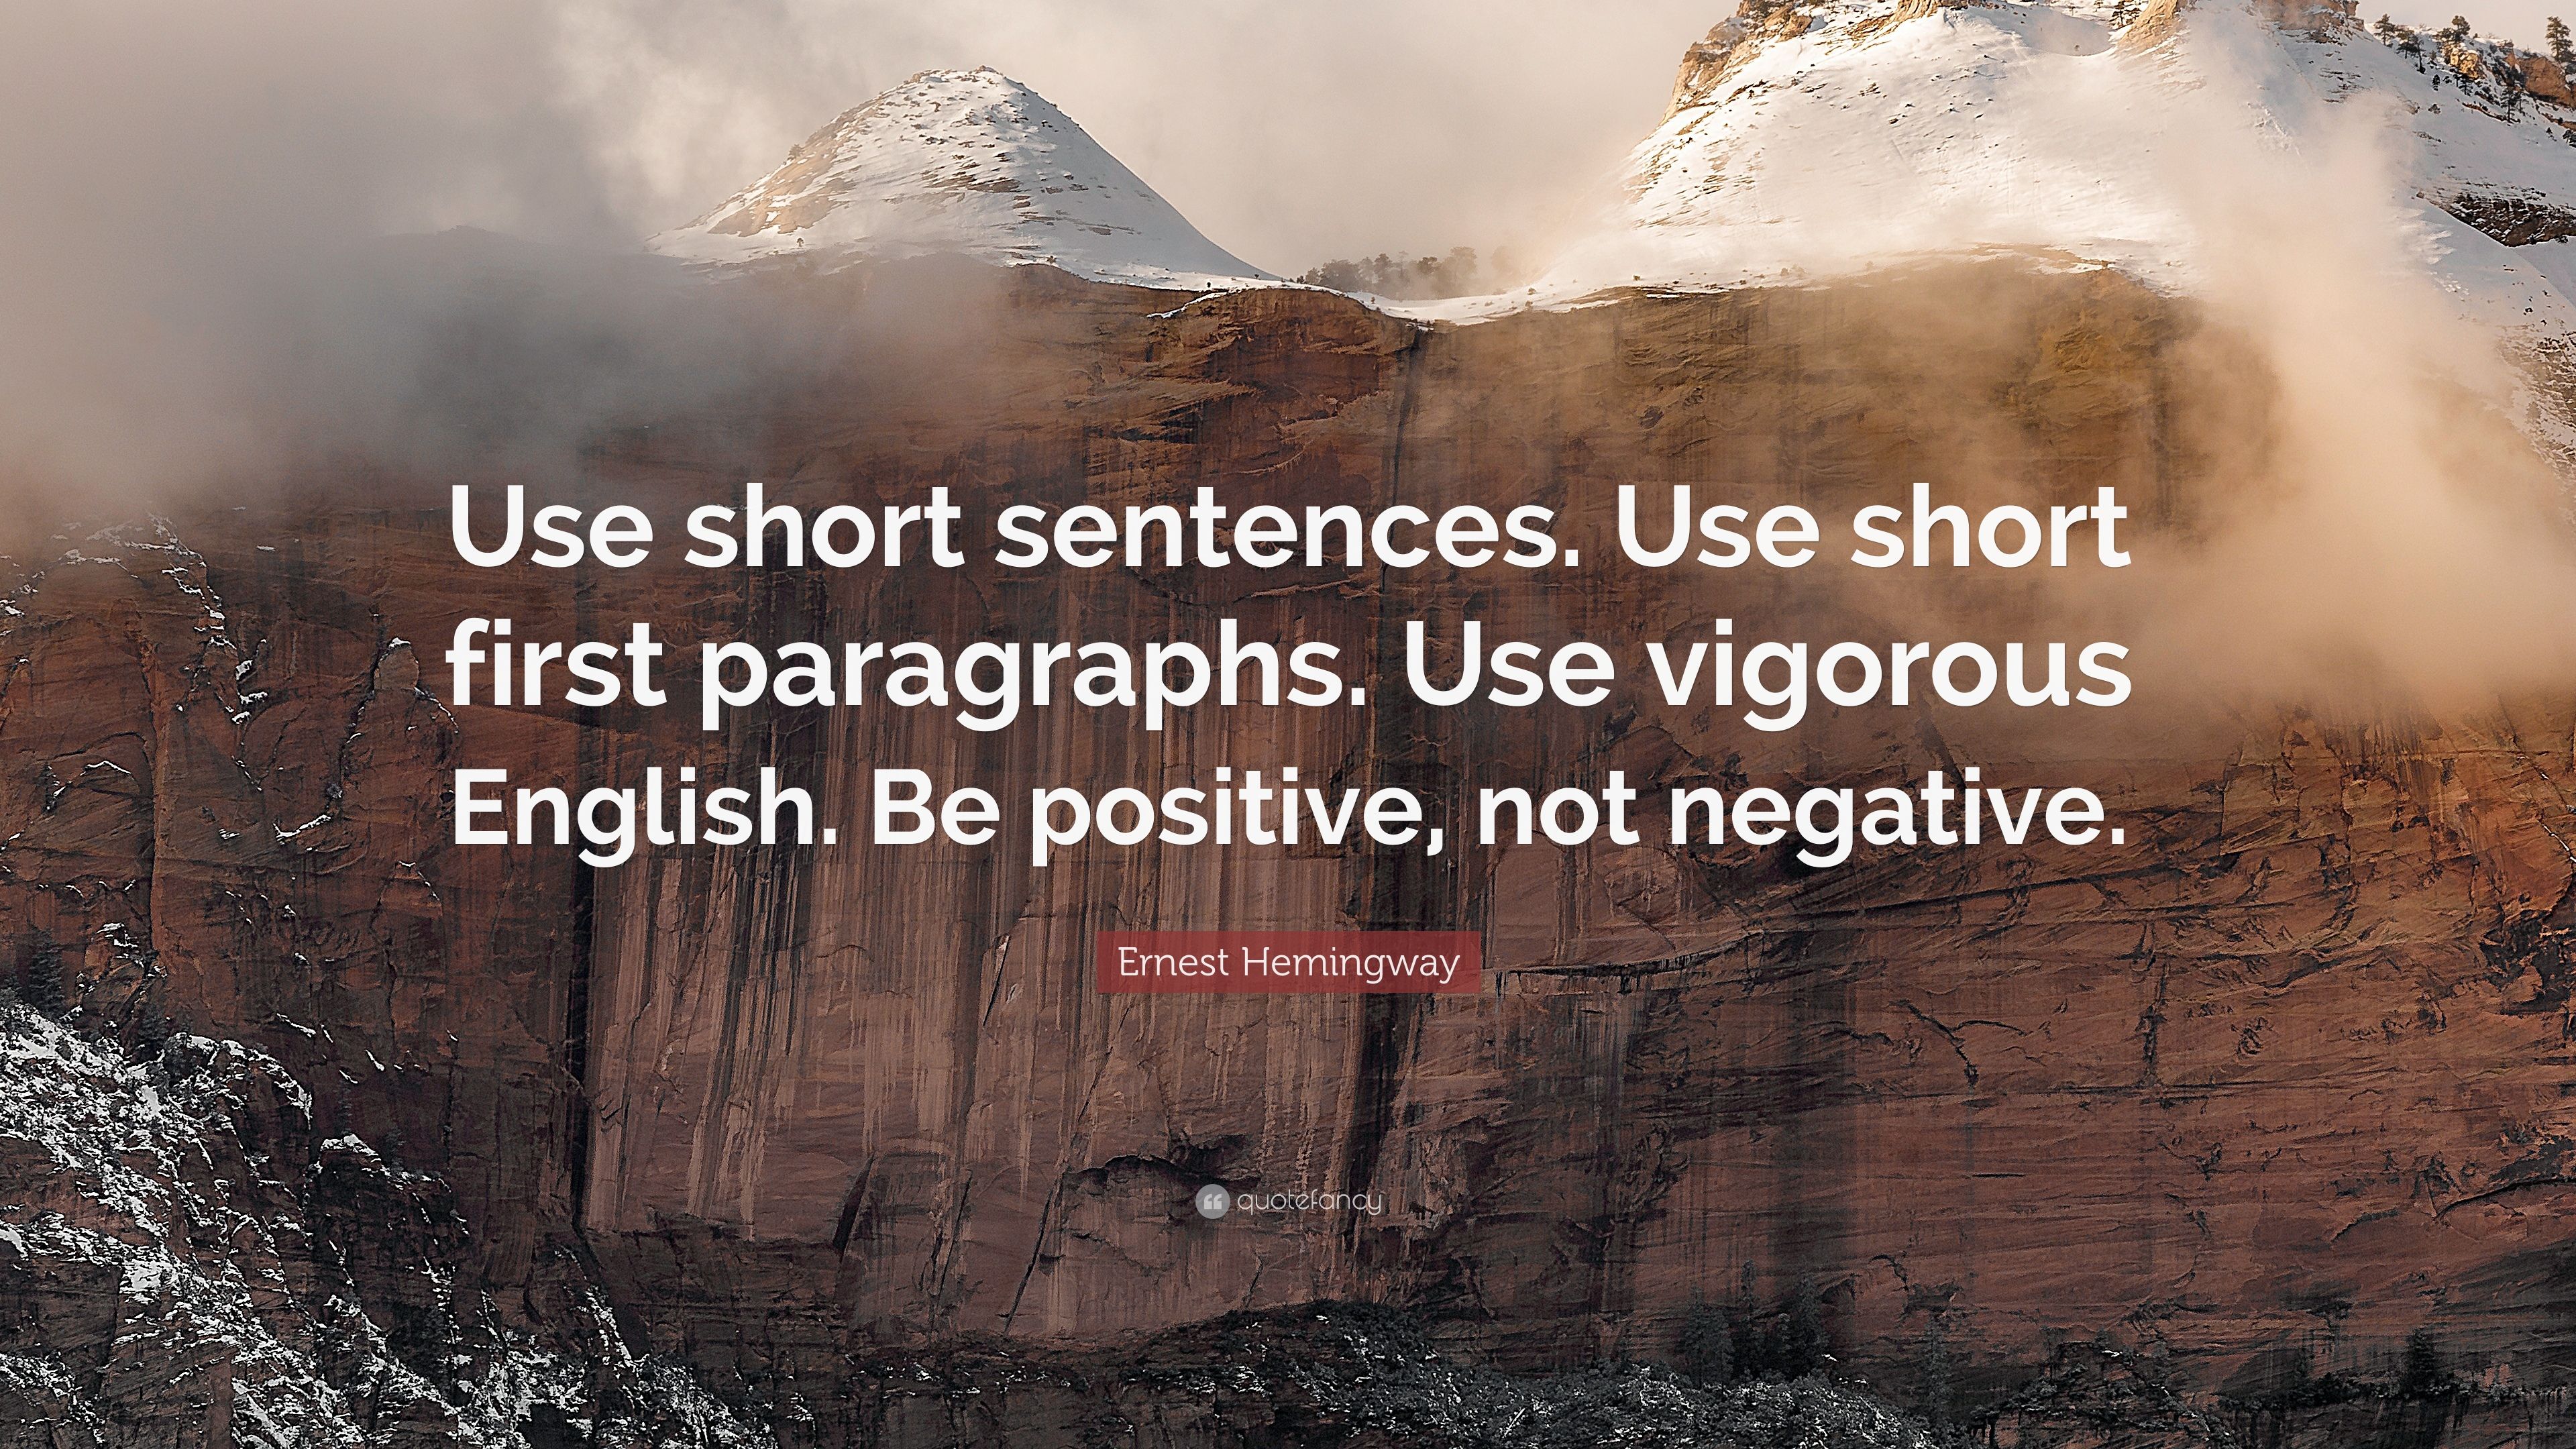 Ernest Hemingway Quote: “Use short sentences. Use short first